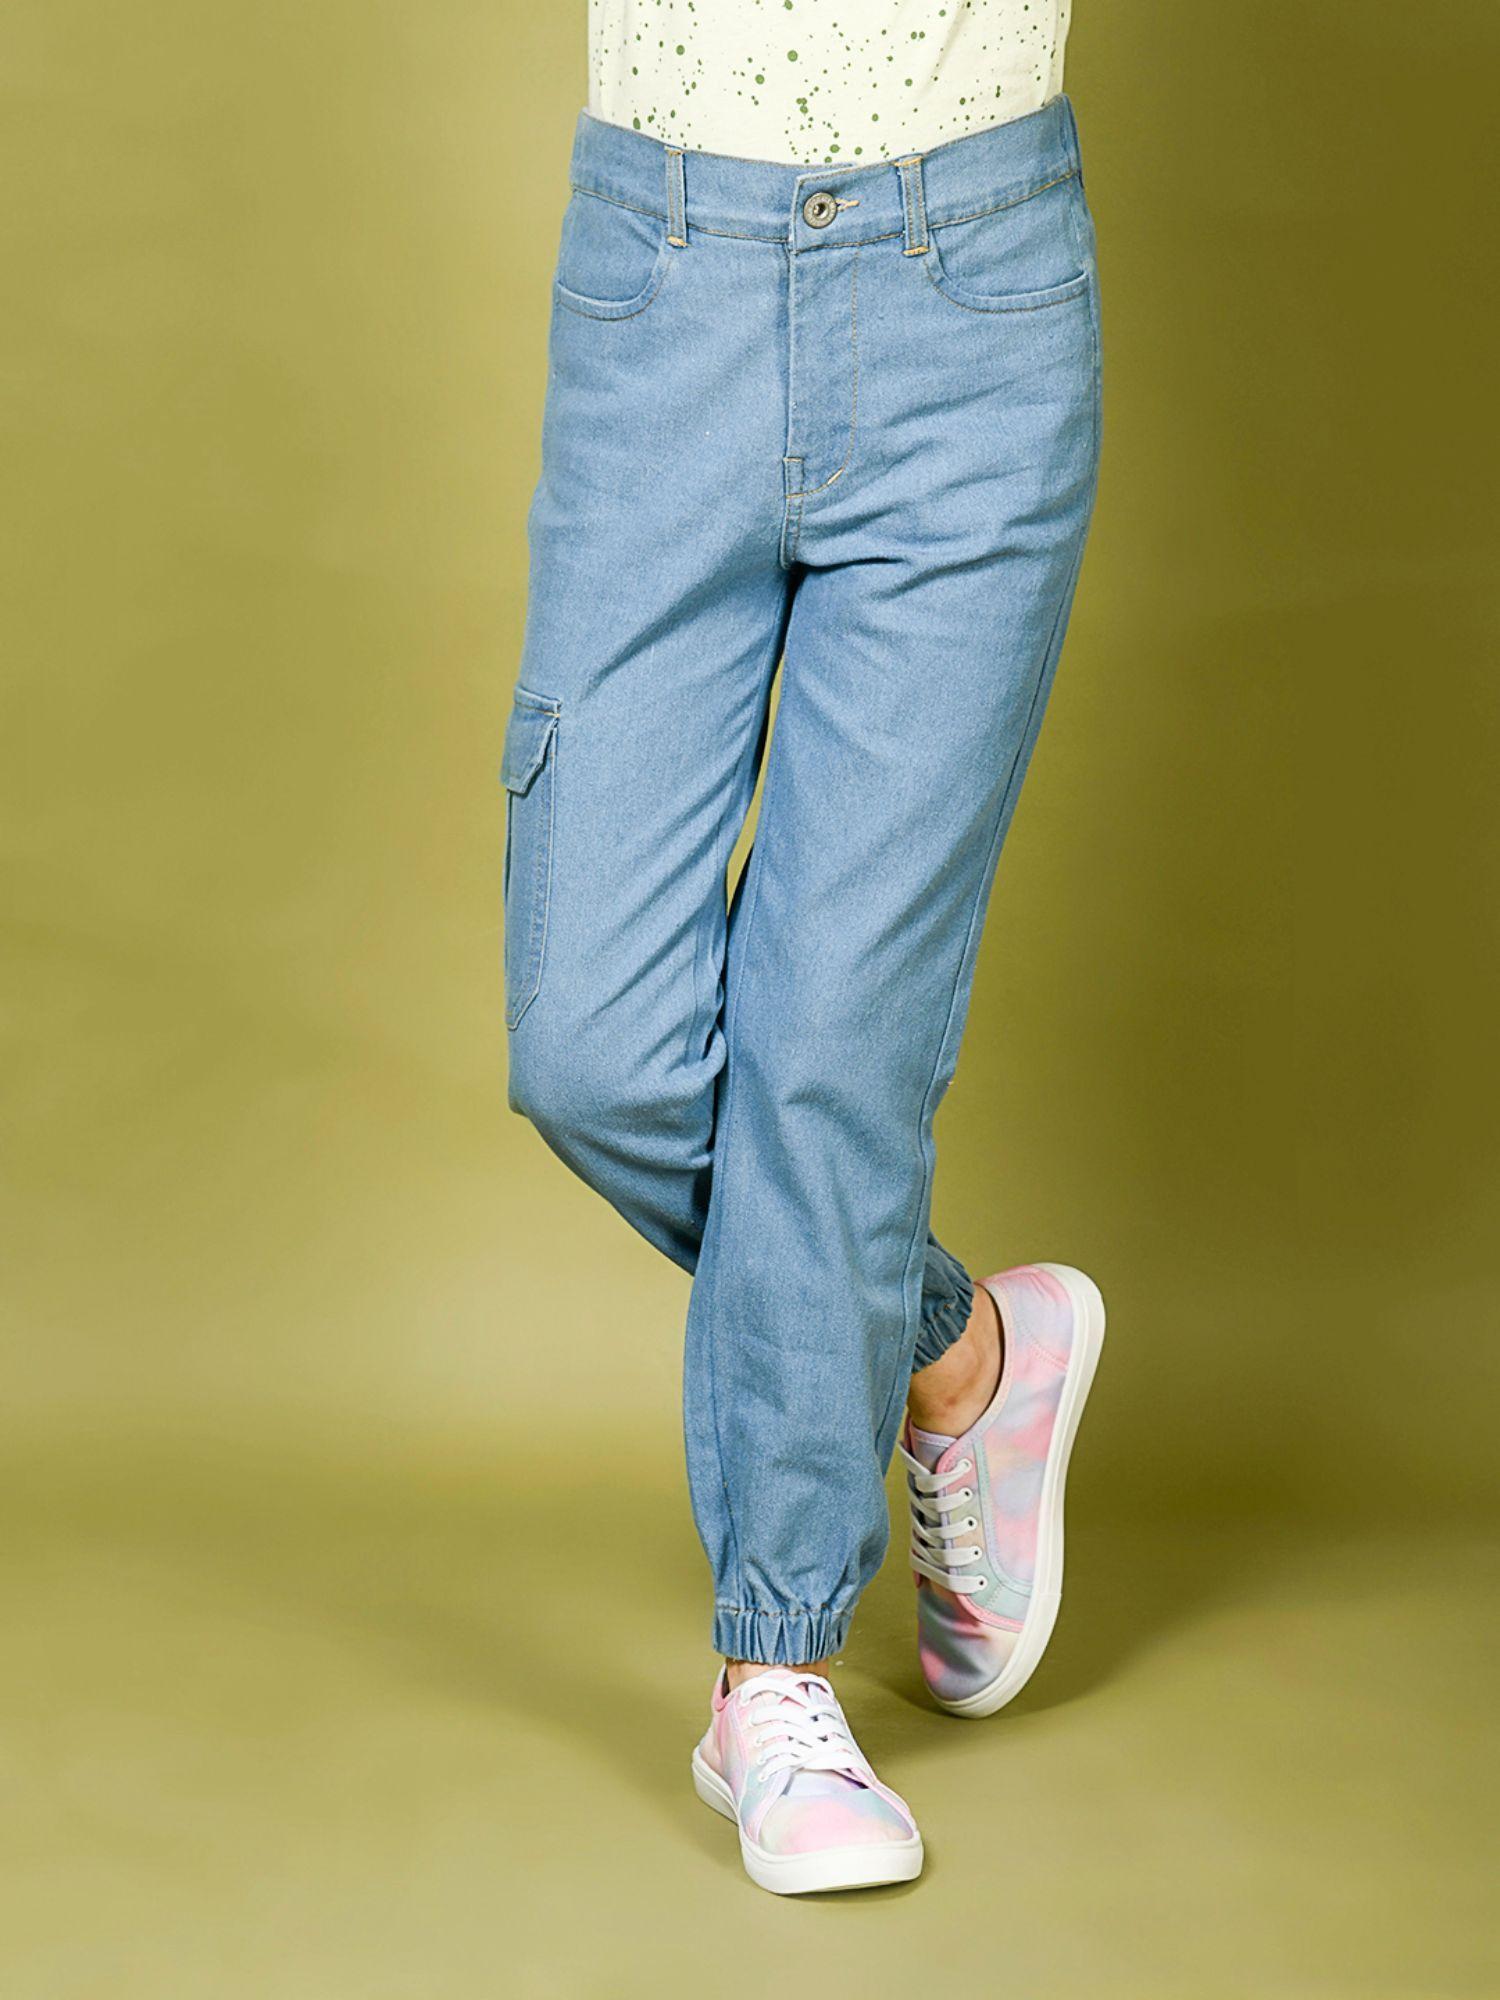 blue solid joggers style denim jeans pant